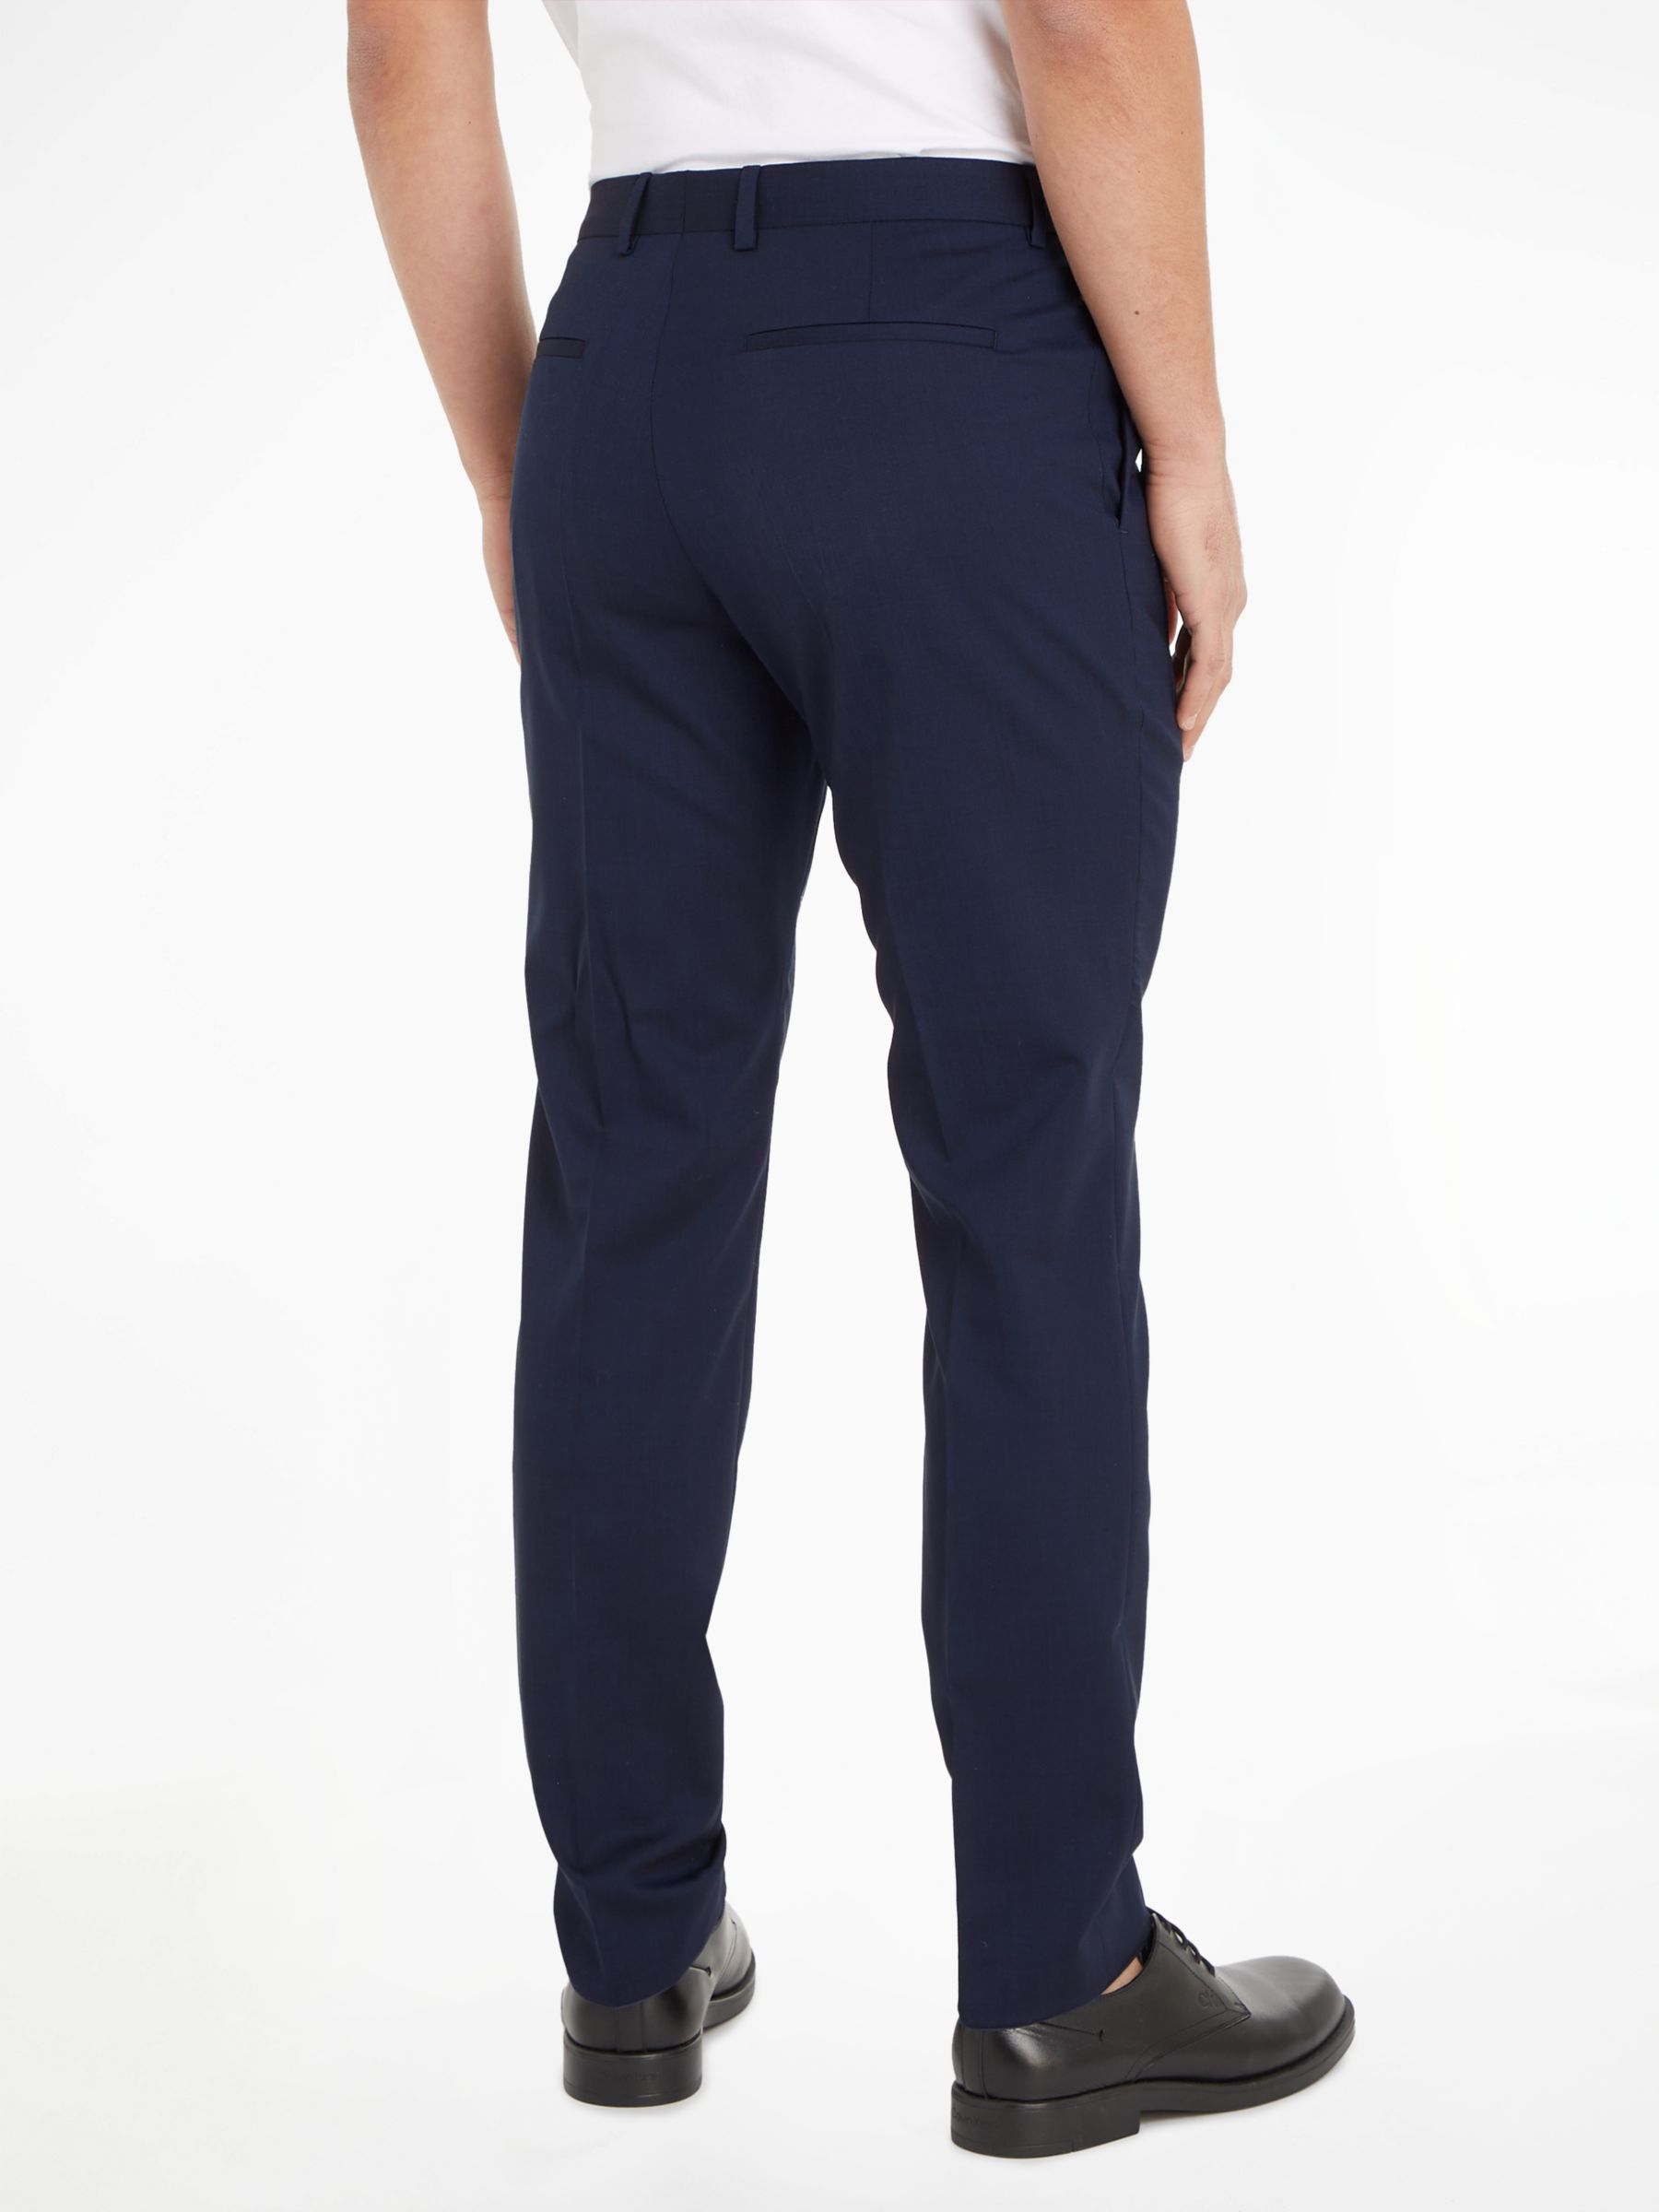 Buy Calvin Klein Slim Fit Stretch Wool Blend Trousers, Ink Blue Online at johnlewis.com